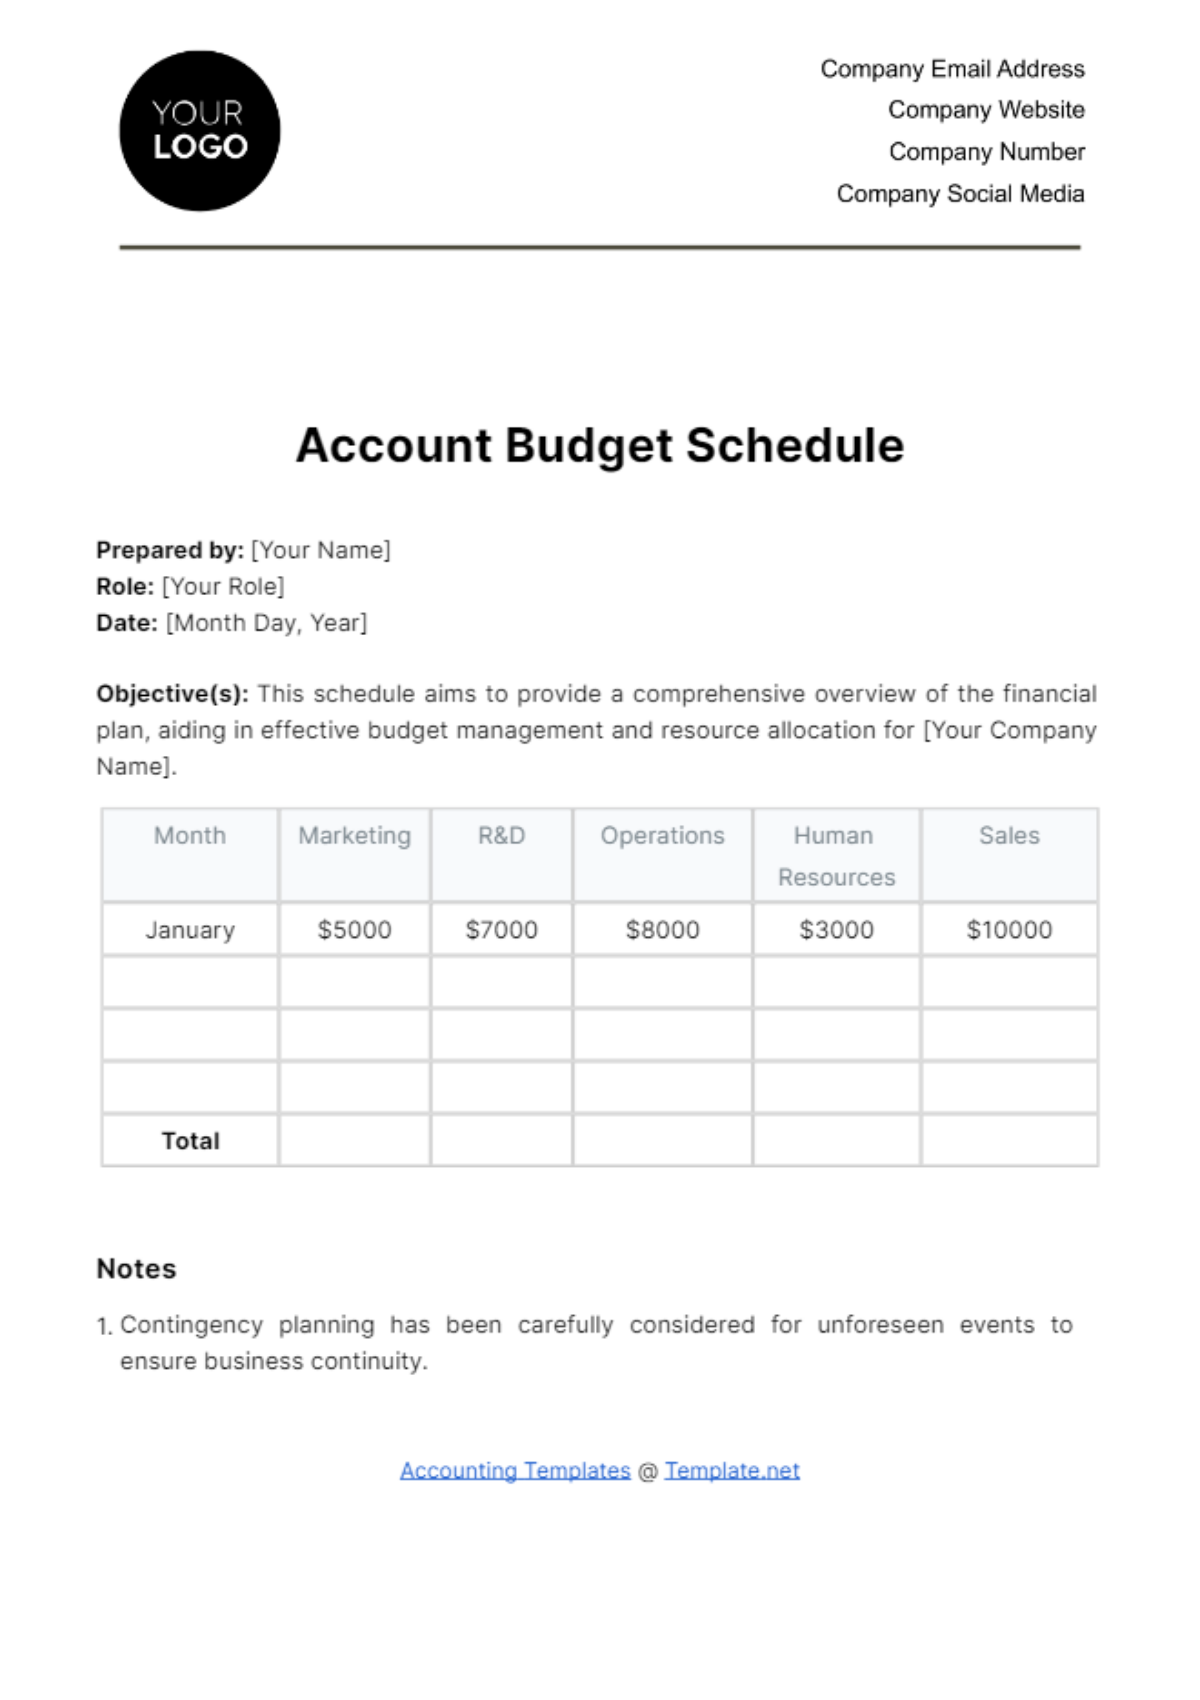 Account Budget Schedule Template